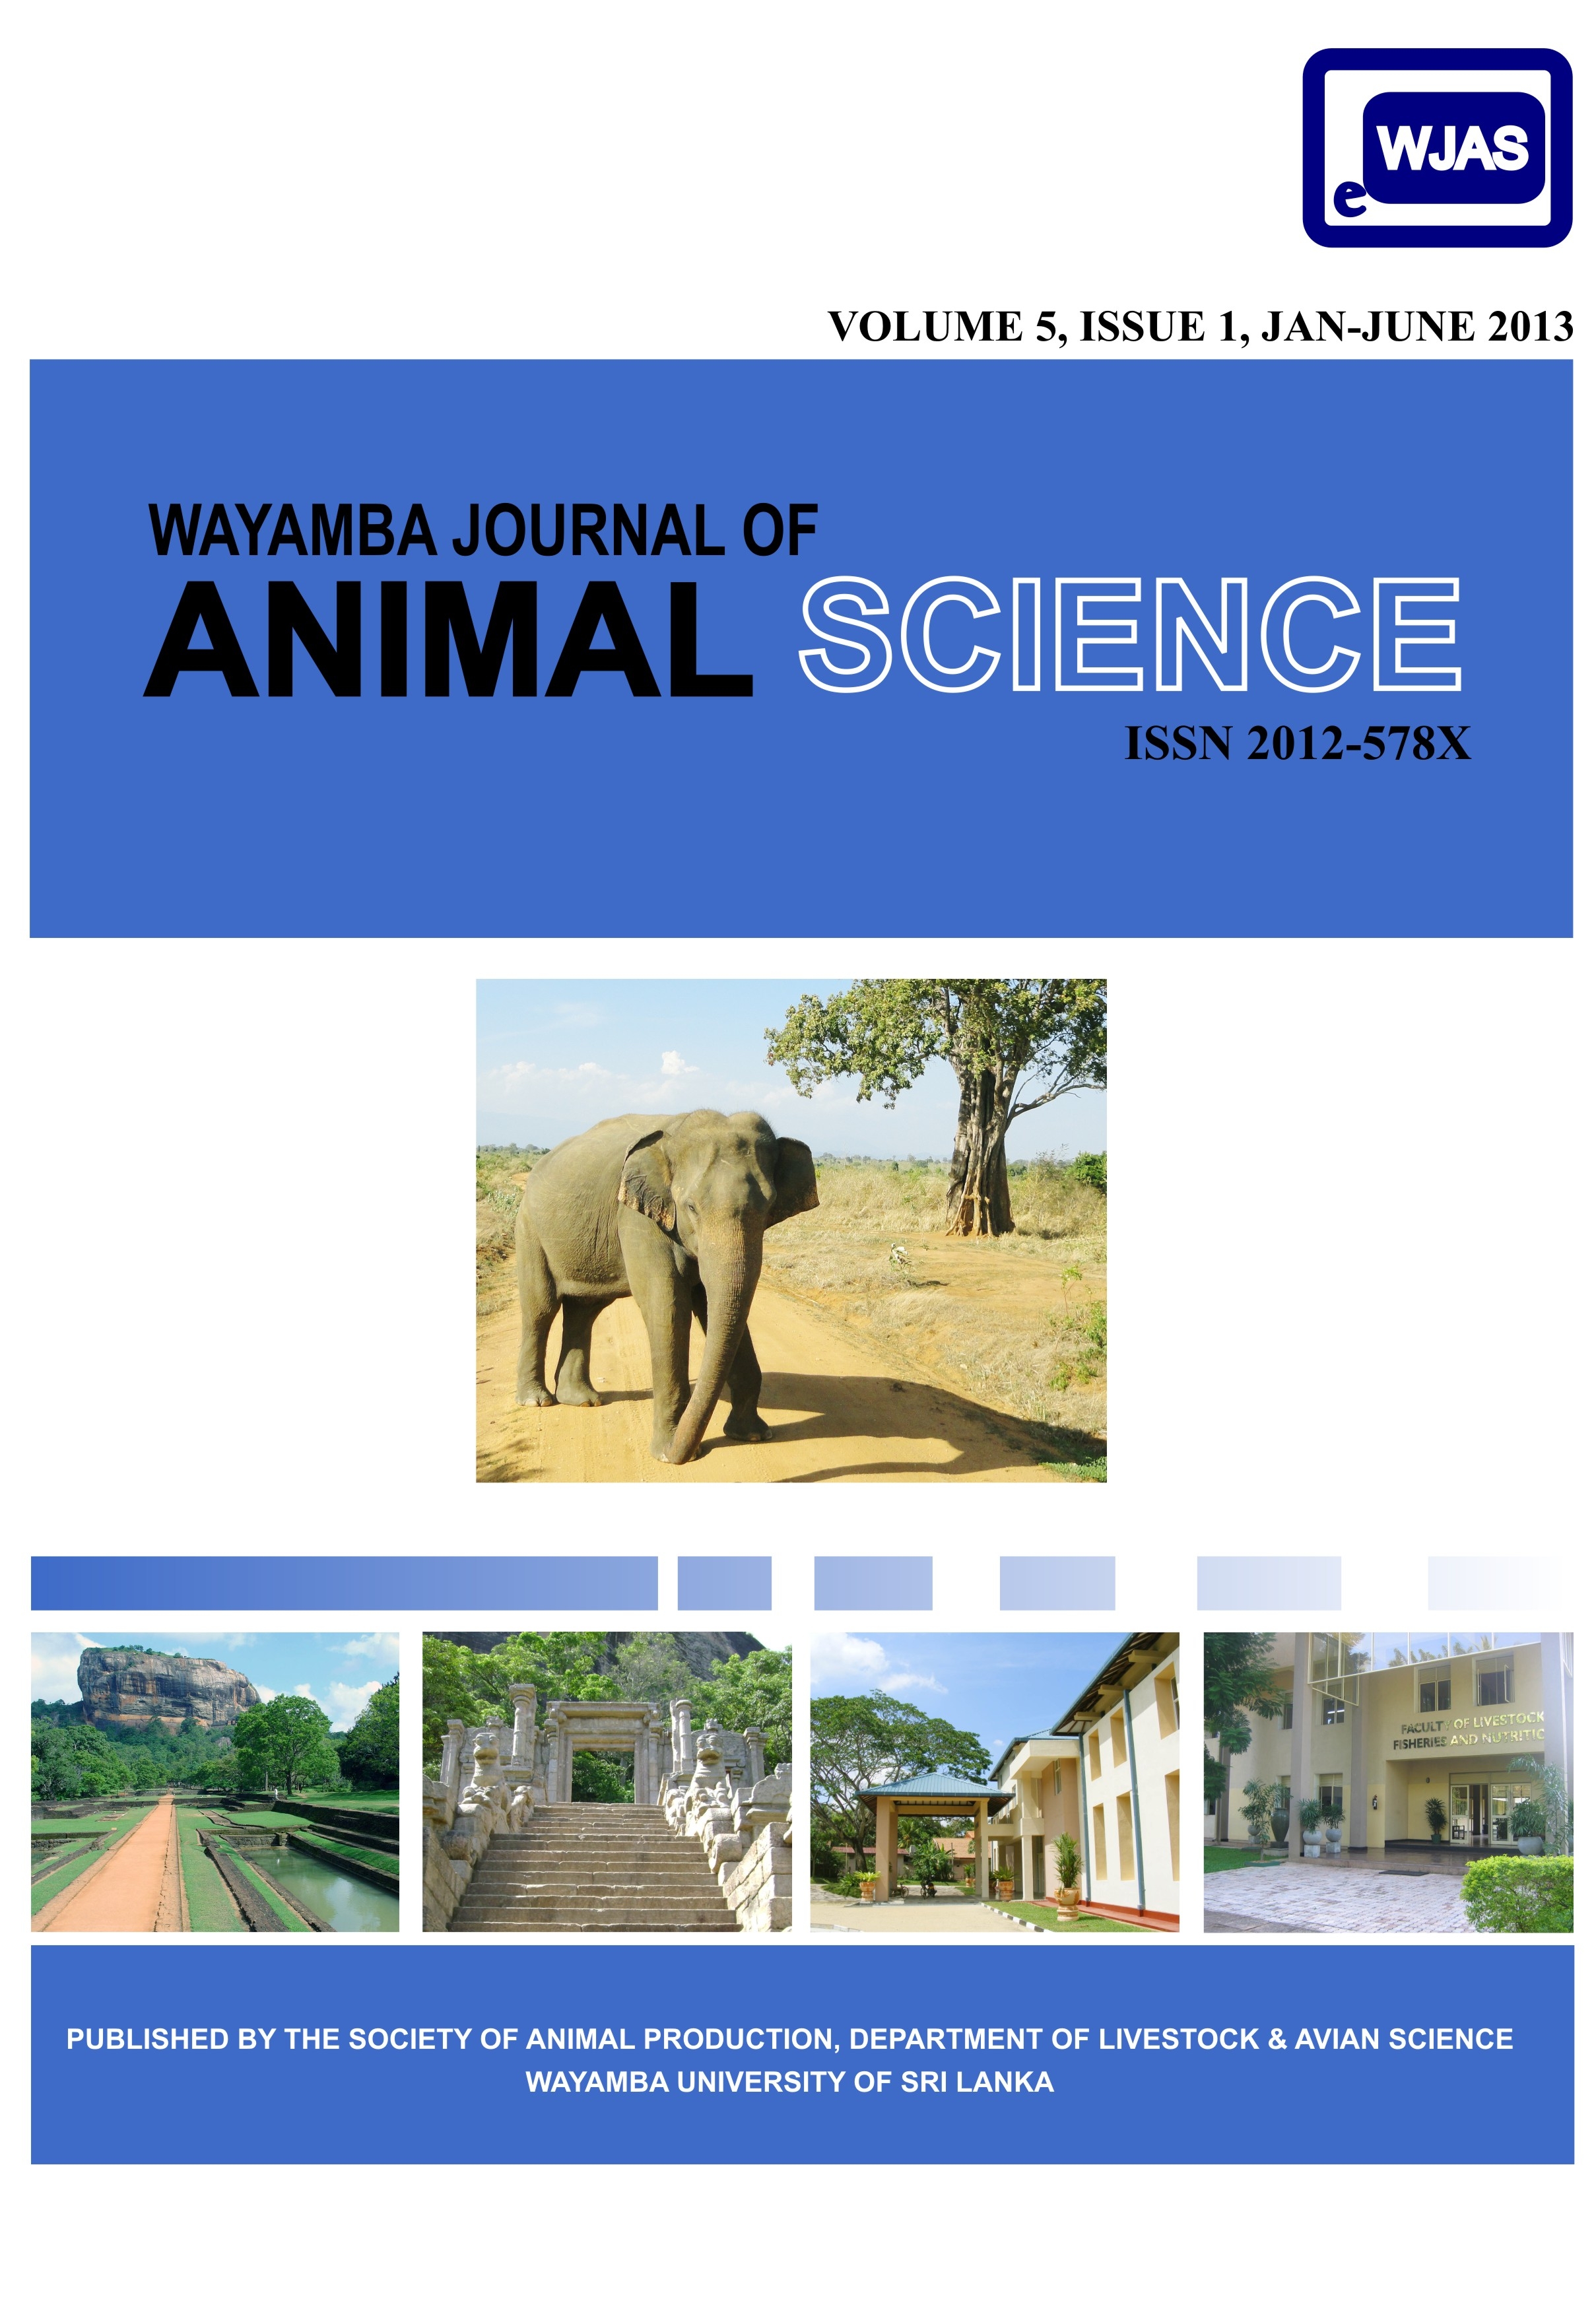 Journal: Wayamba Journal of Animal Science